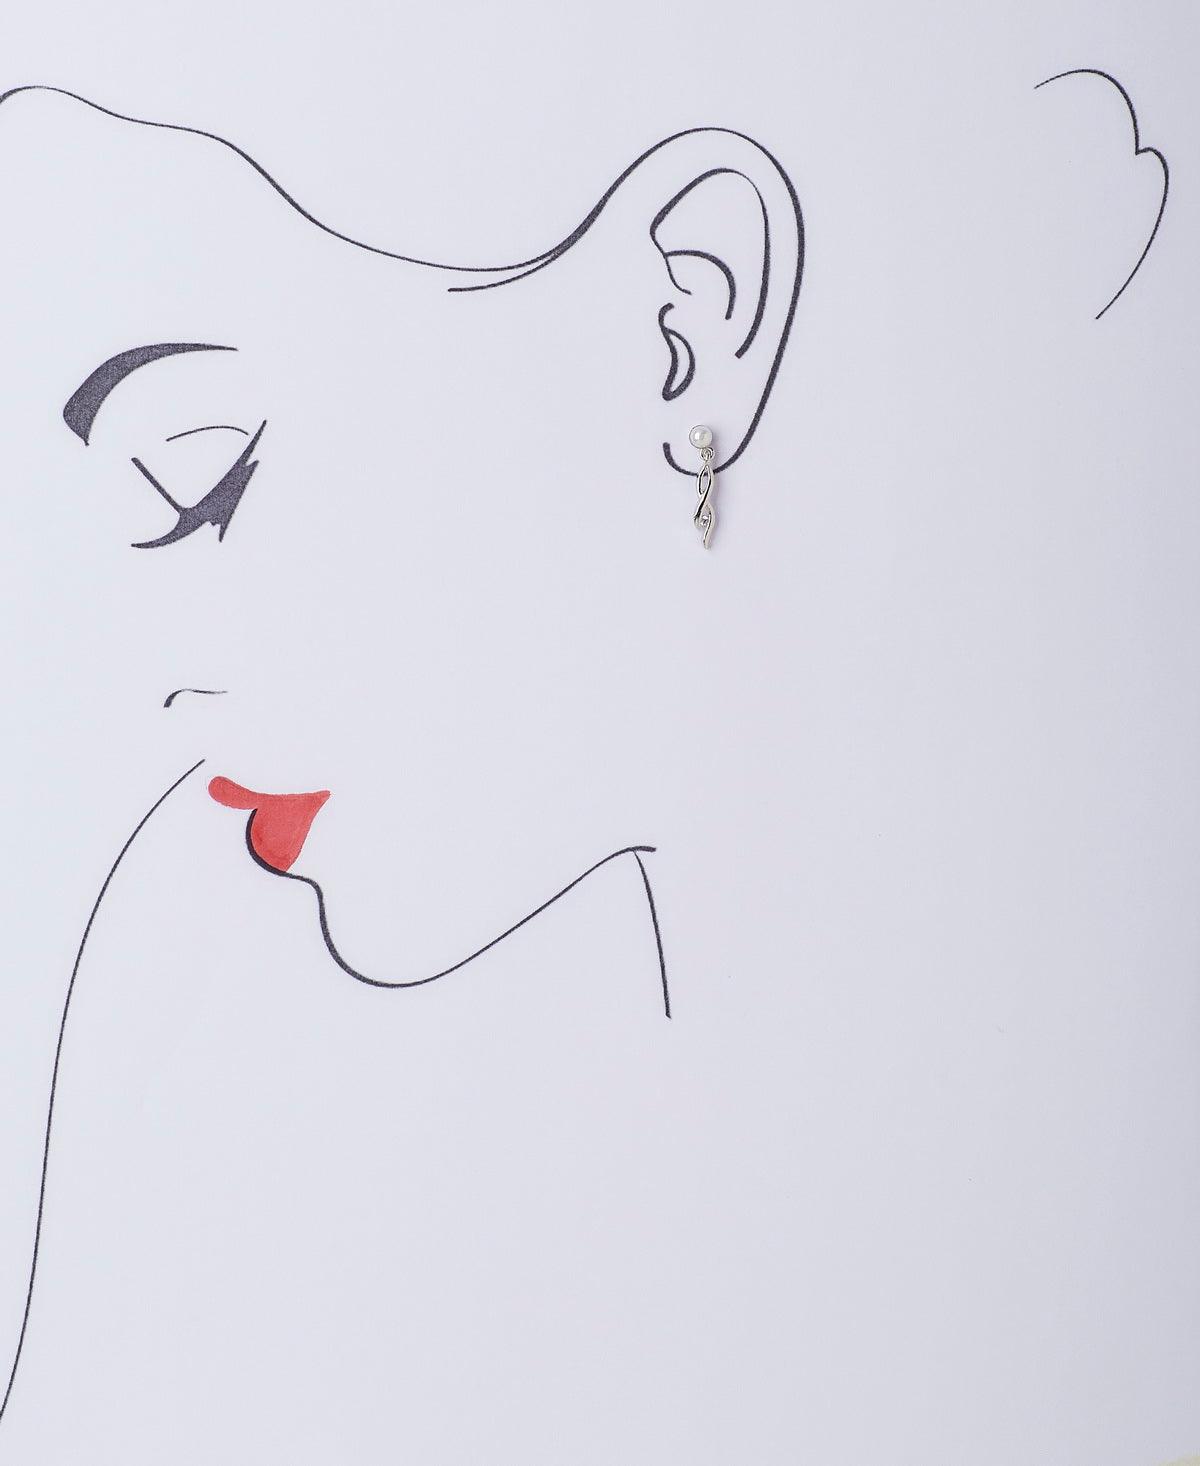 Elegant Pearl Studded Earring - Chandrani Pearls